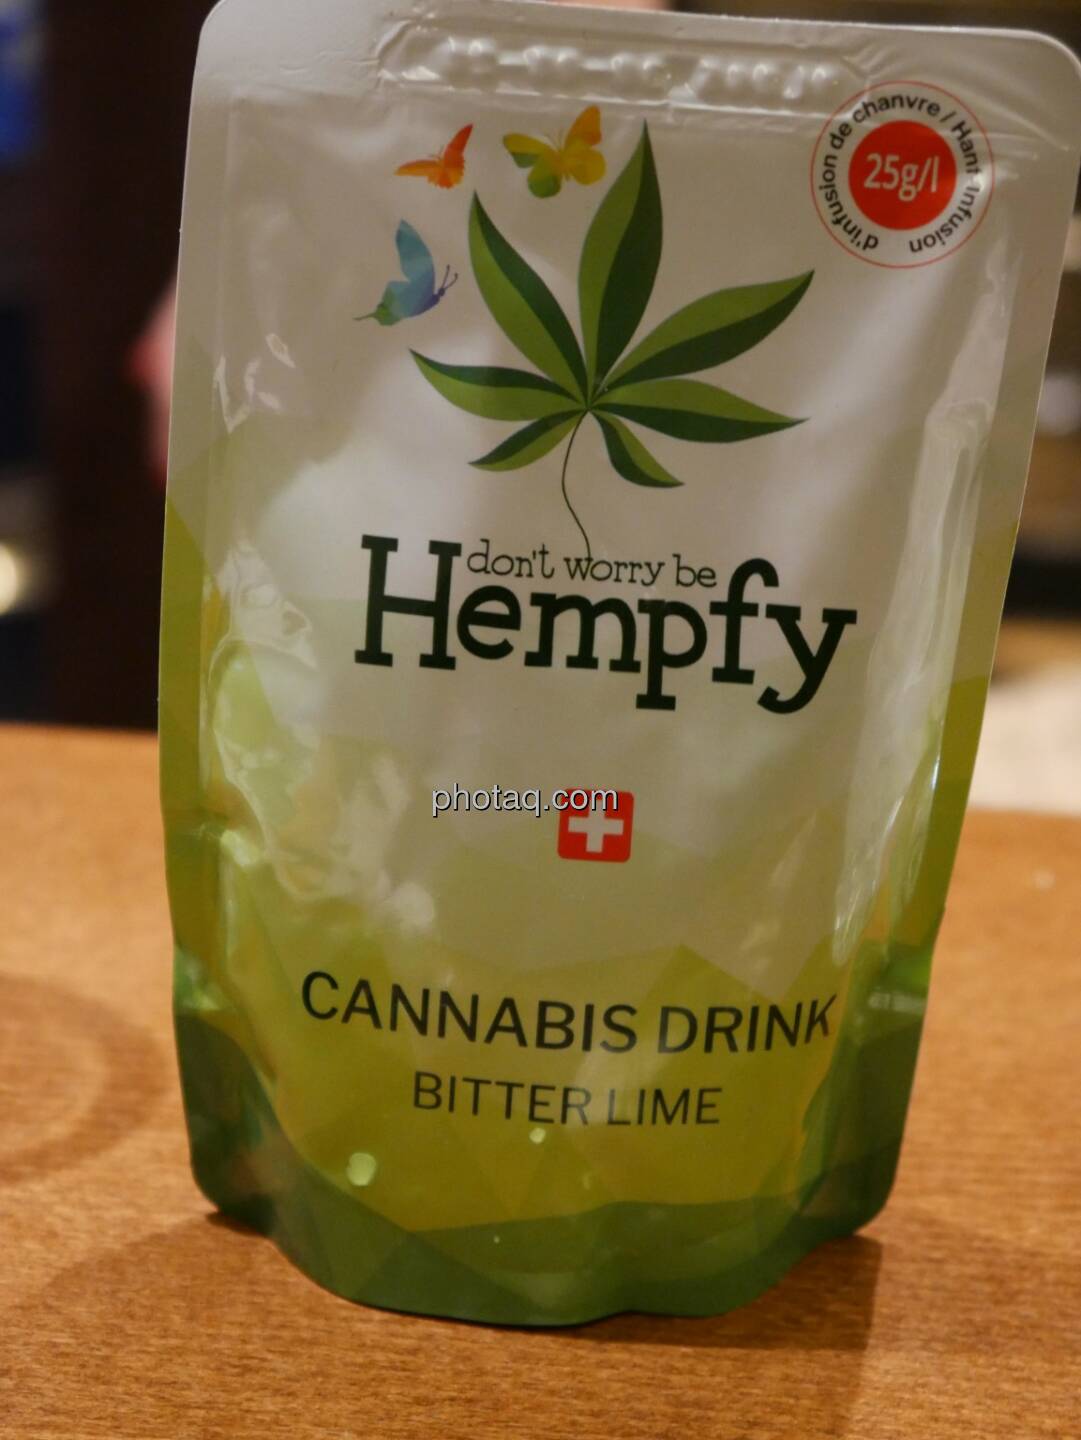 Hempfy, Cannabis Drink